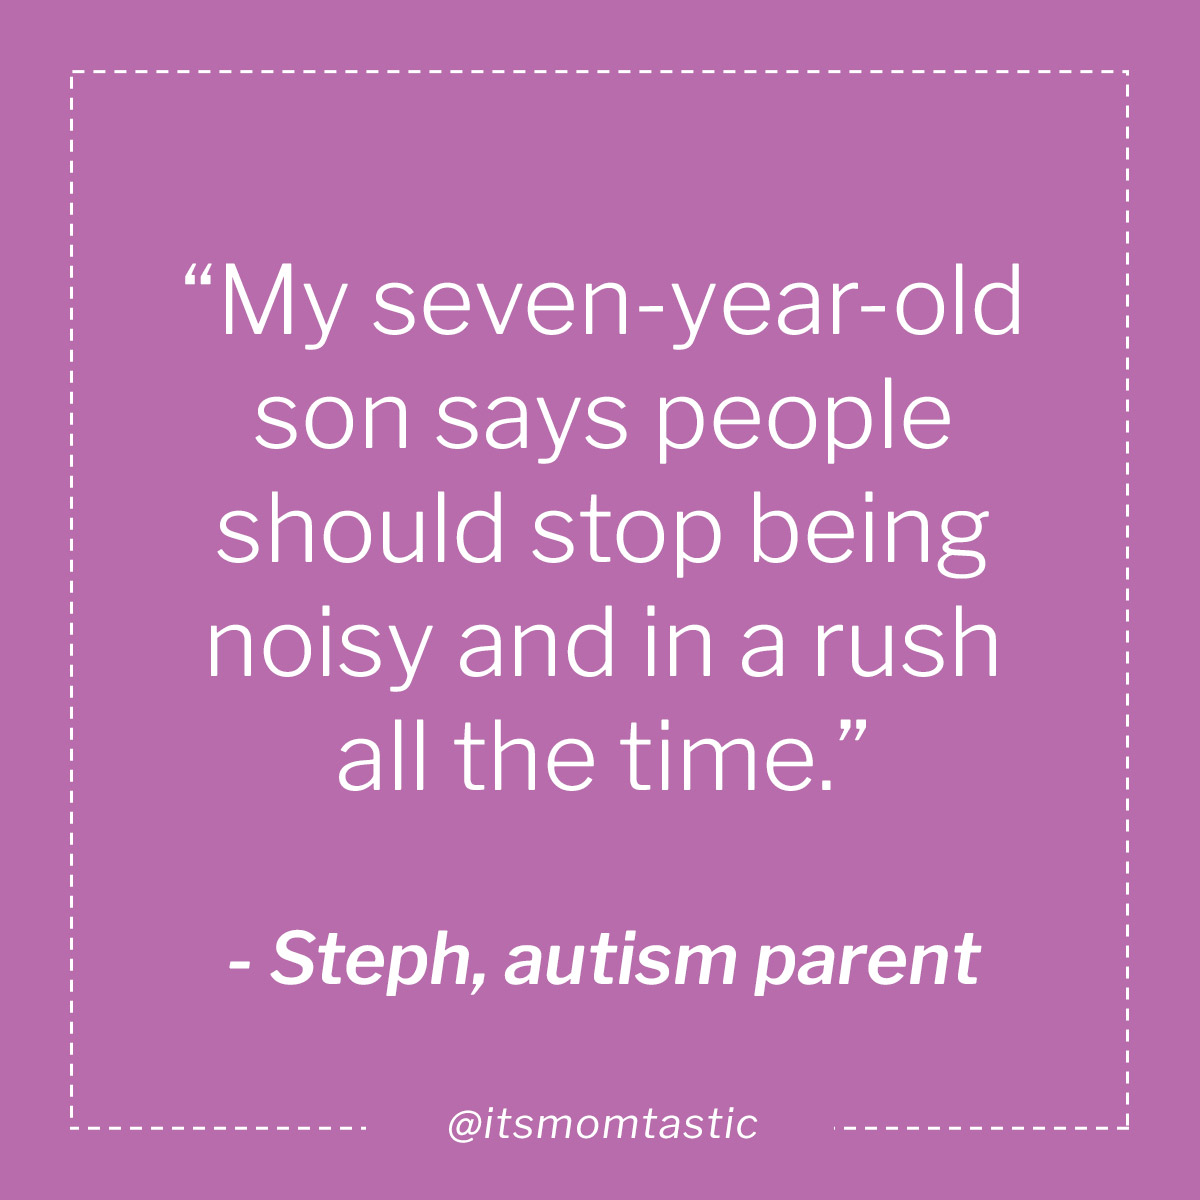 Steph, autism parent